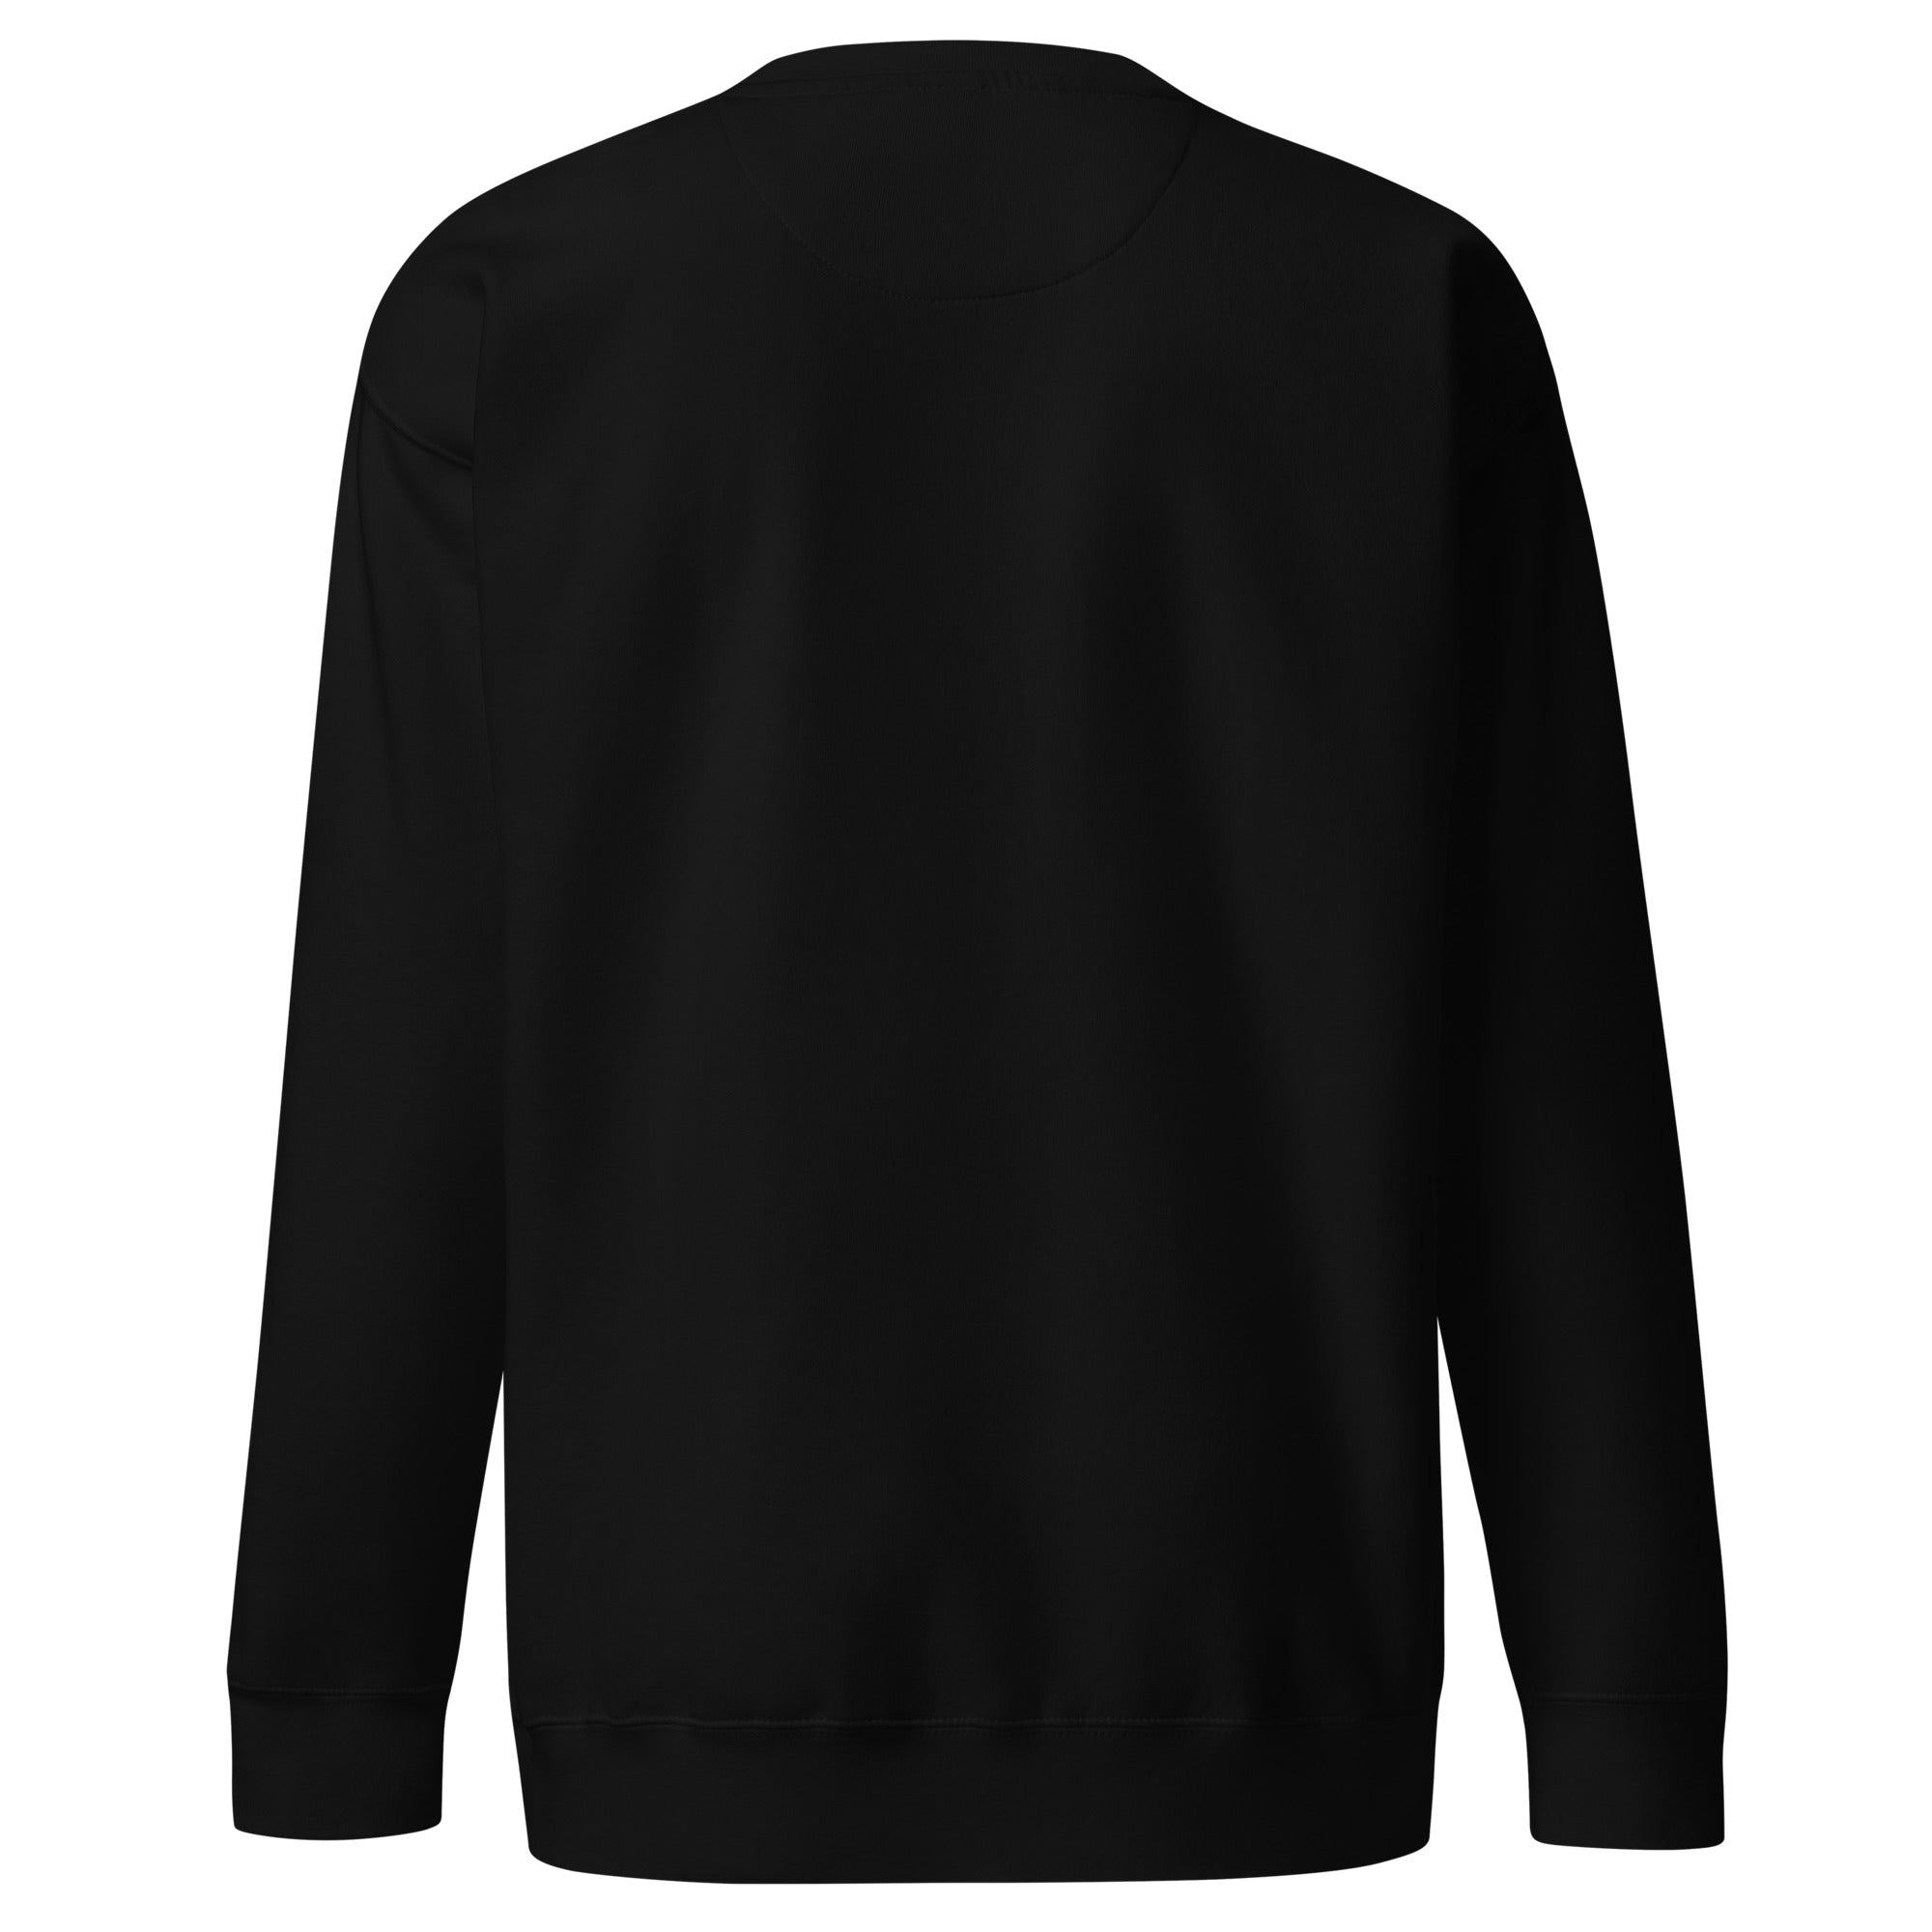 Will Of Fire Embroidered Premium Crewneck Sweatshirt